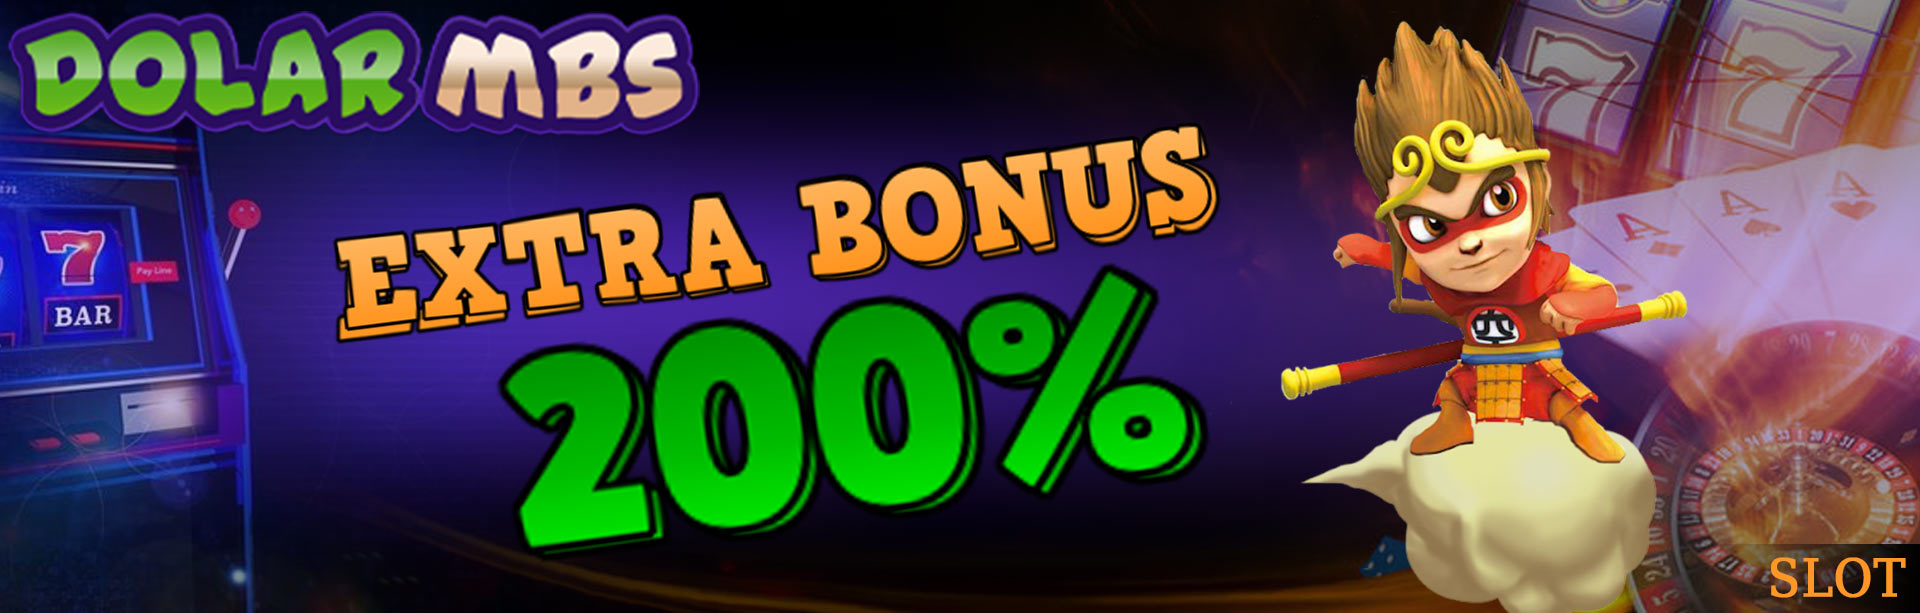 bonus slot 200%